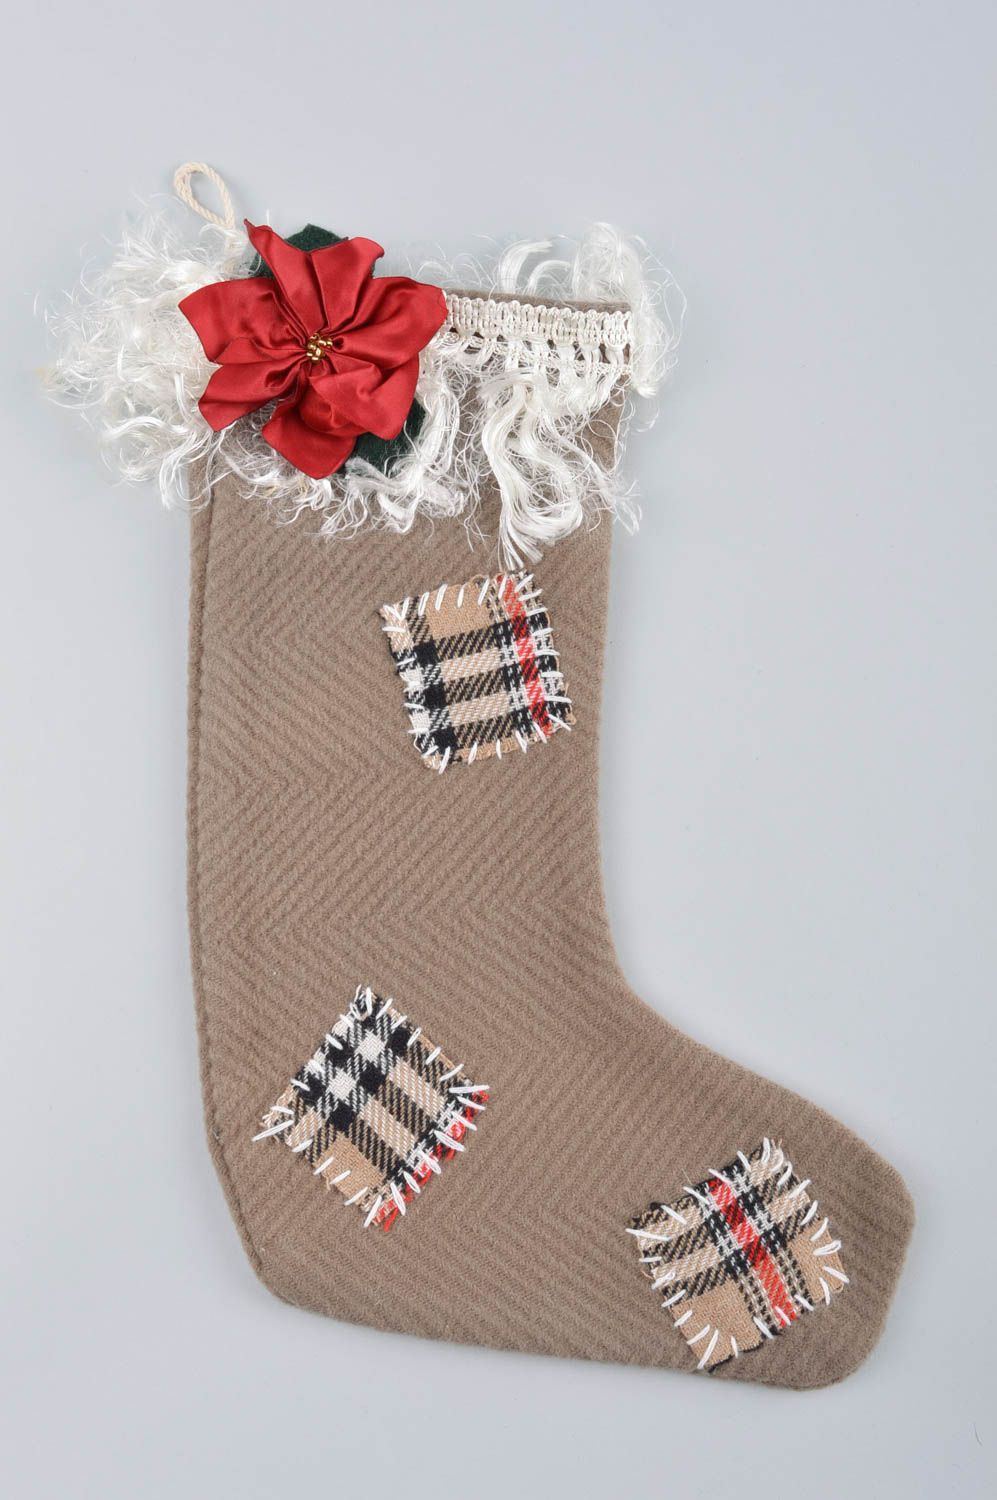 Homemade home decor Christmas stockings Xmas stockings souvenir ideas cool gifts photo 3